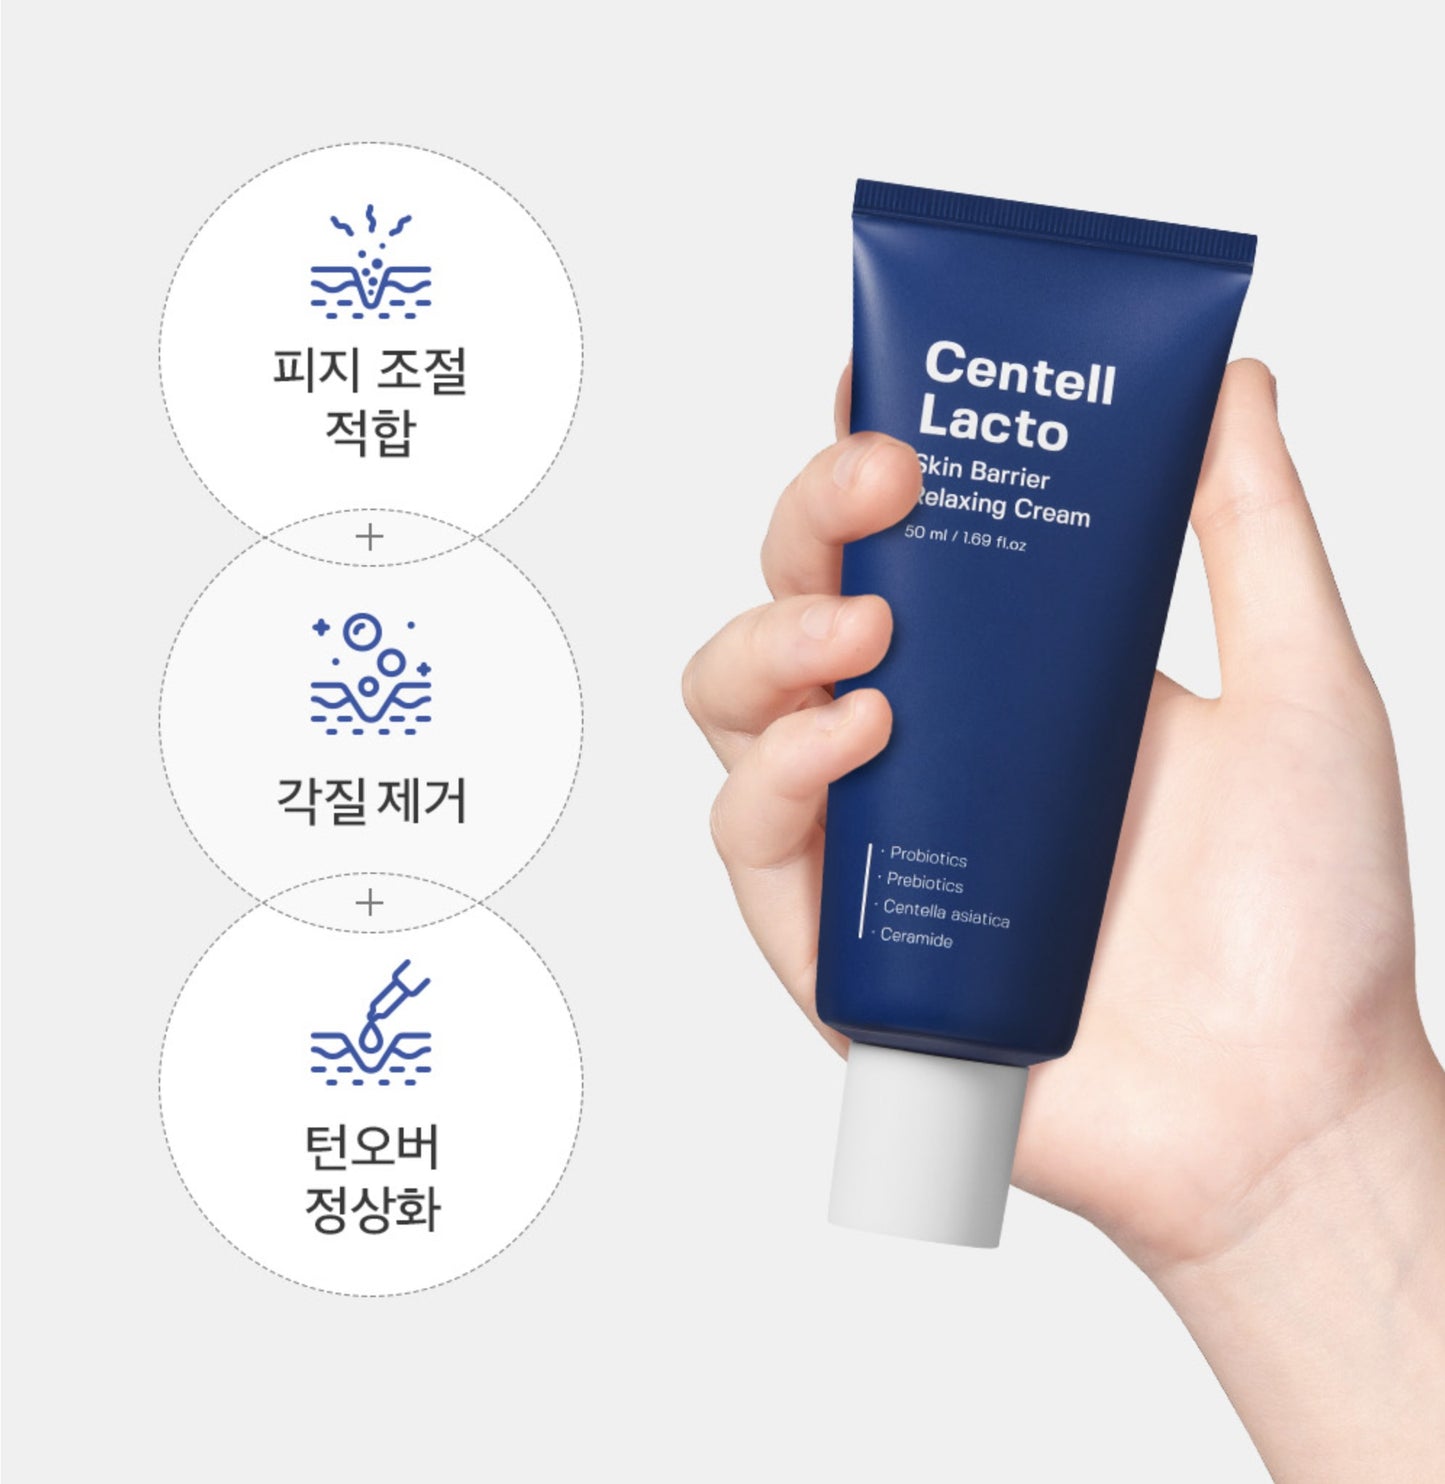 SUNBOON EDITOR Acne Traces Trouble Care Centell-Lacto Set (Cream + Essence + Cleanser) Centella Complex Pro & Pre-biotics Niacinamide / from Seoul, Korea